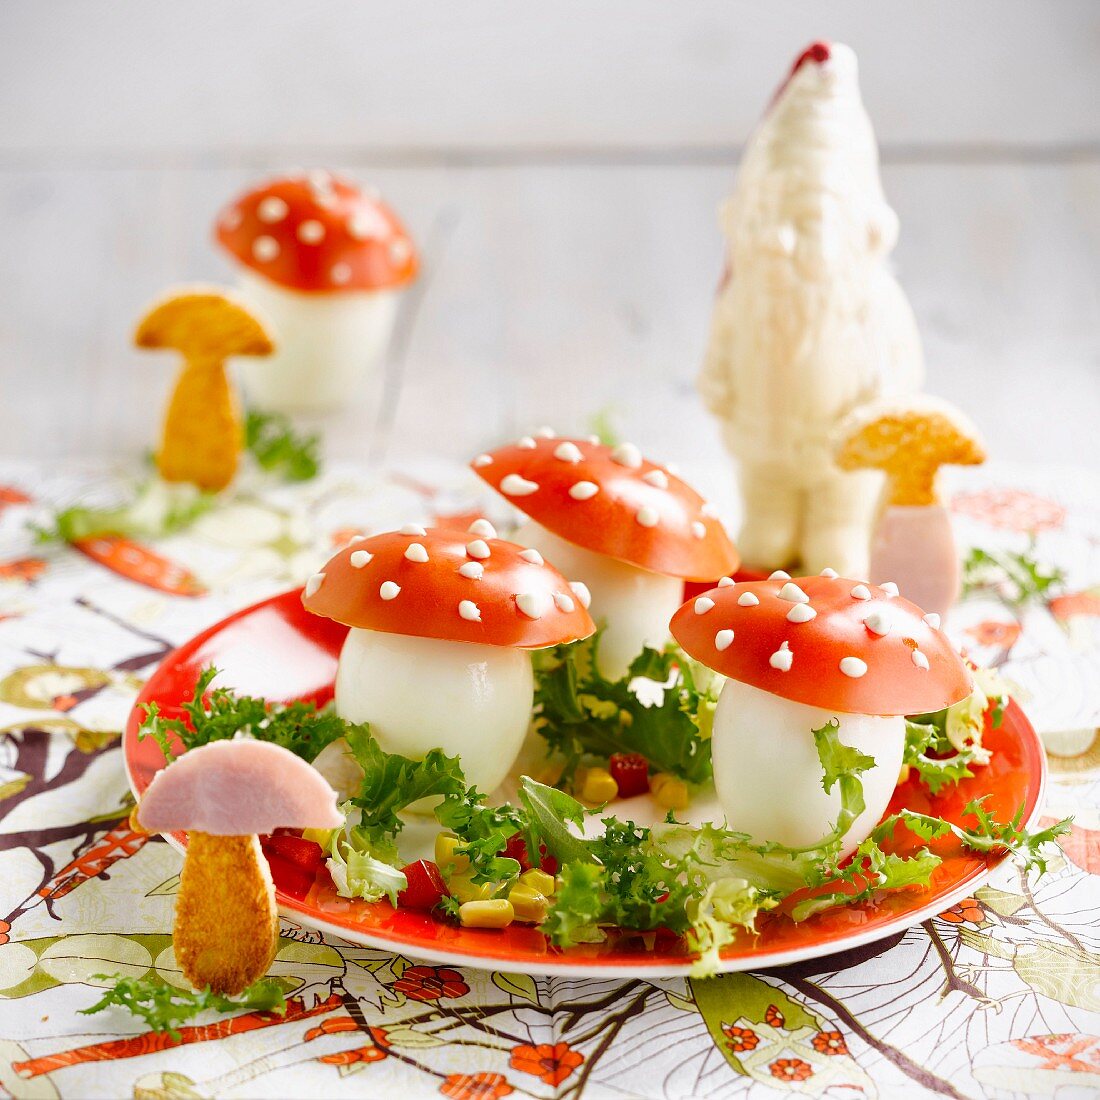 Mushroom-shaped hard-boiled eggs and tomatoes